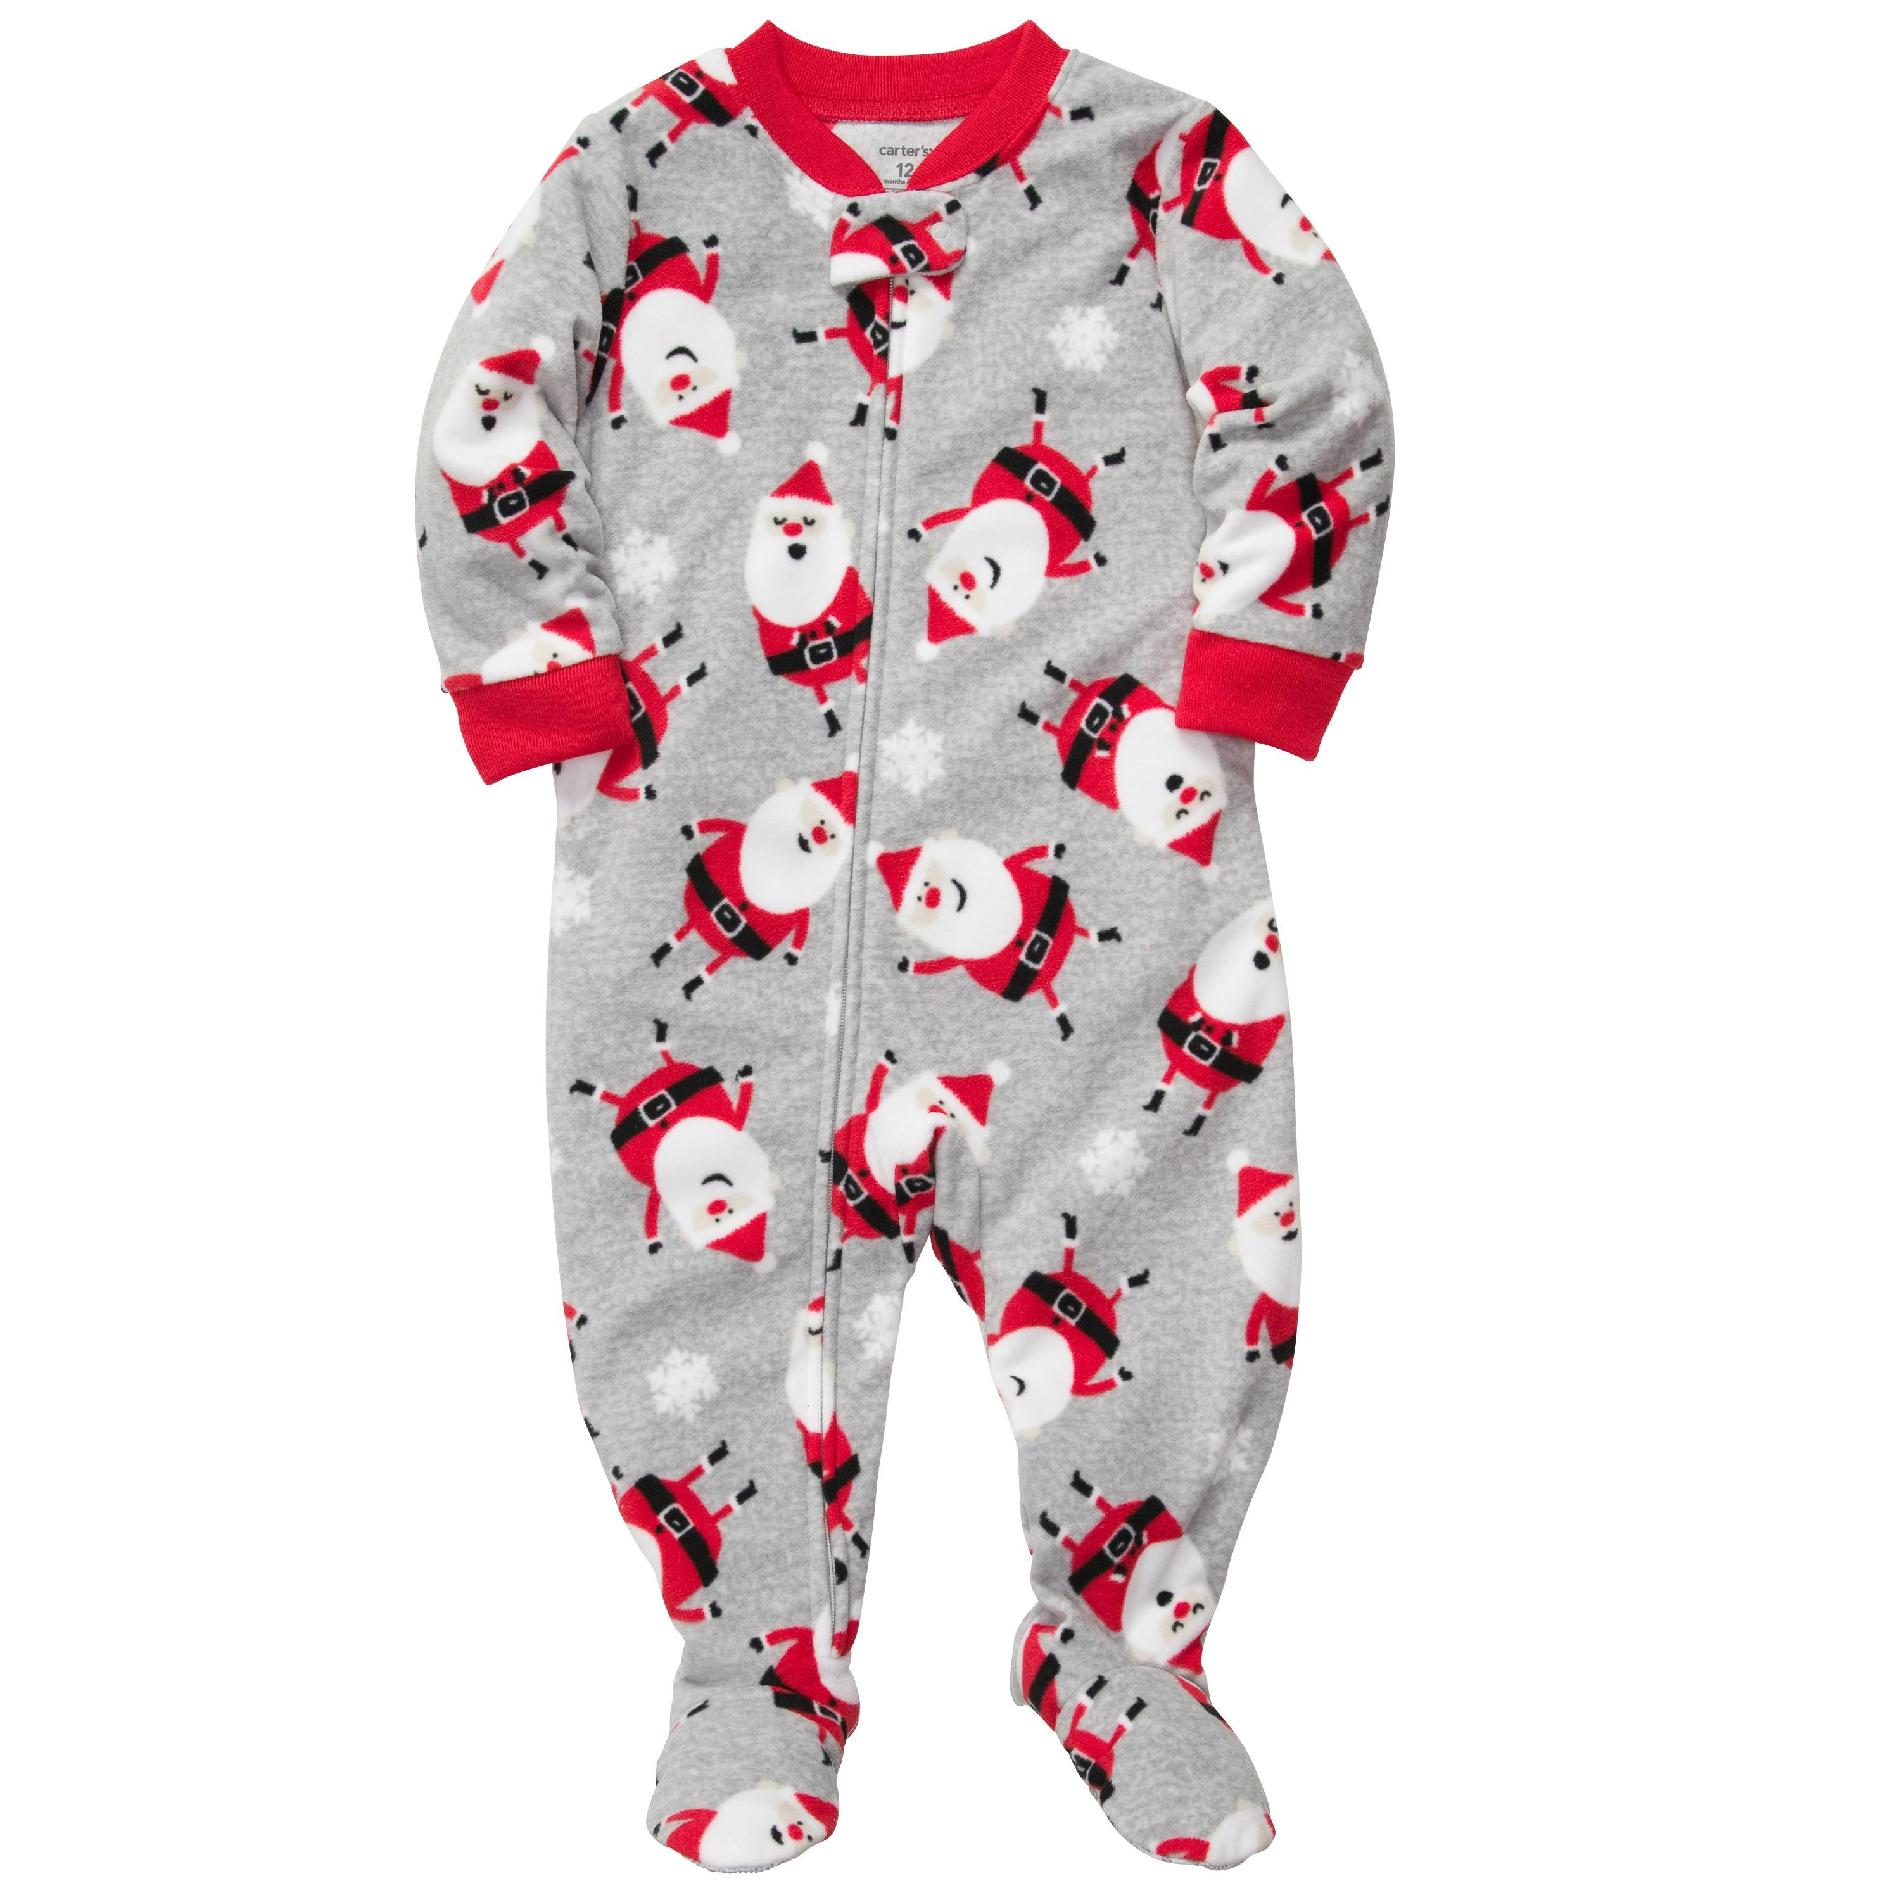 Carter's Infant & Toddler Boy's Christmas Sleeper Pajamas - Holiday Santa